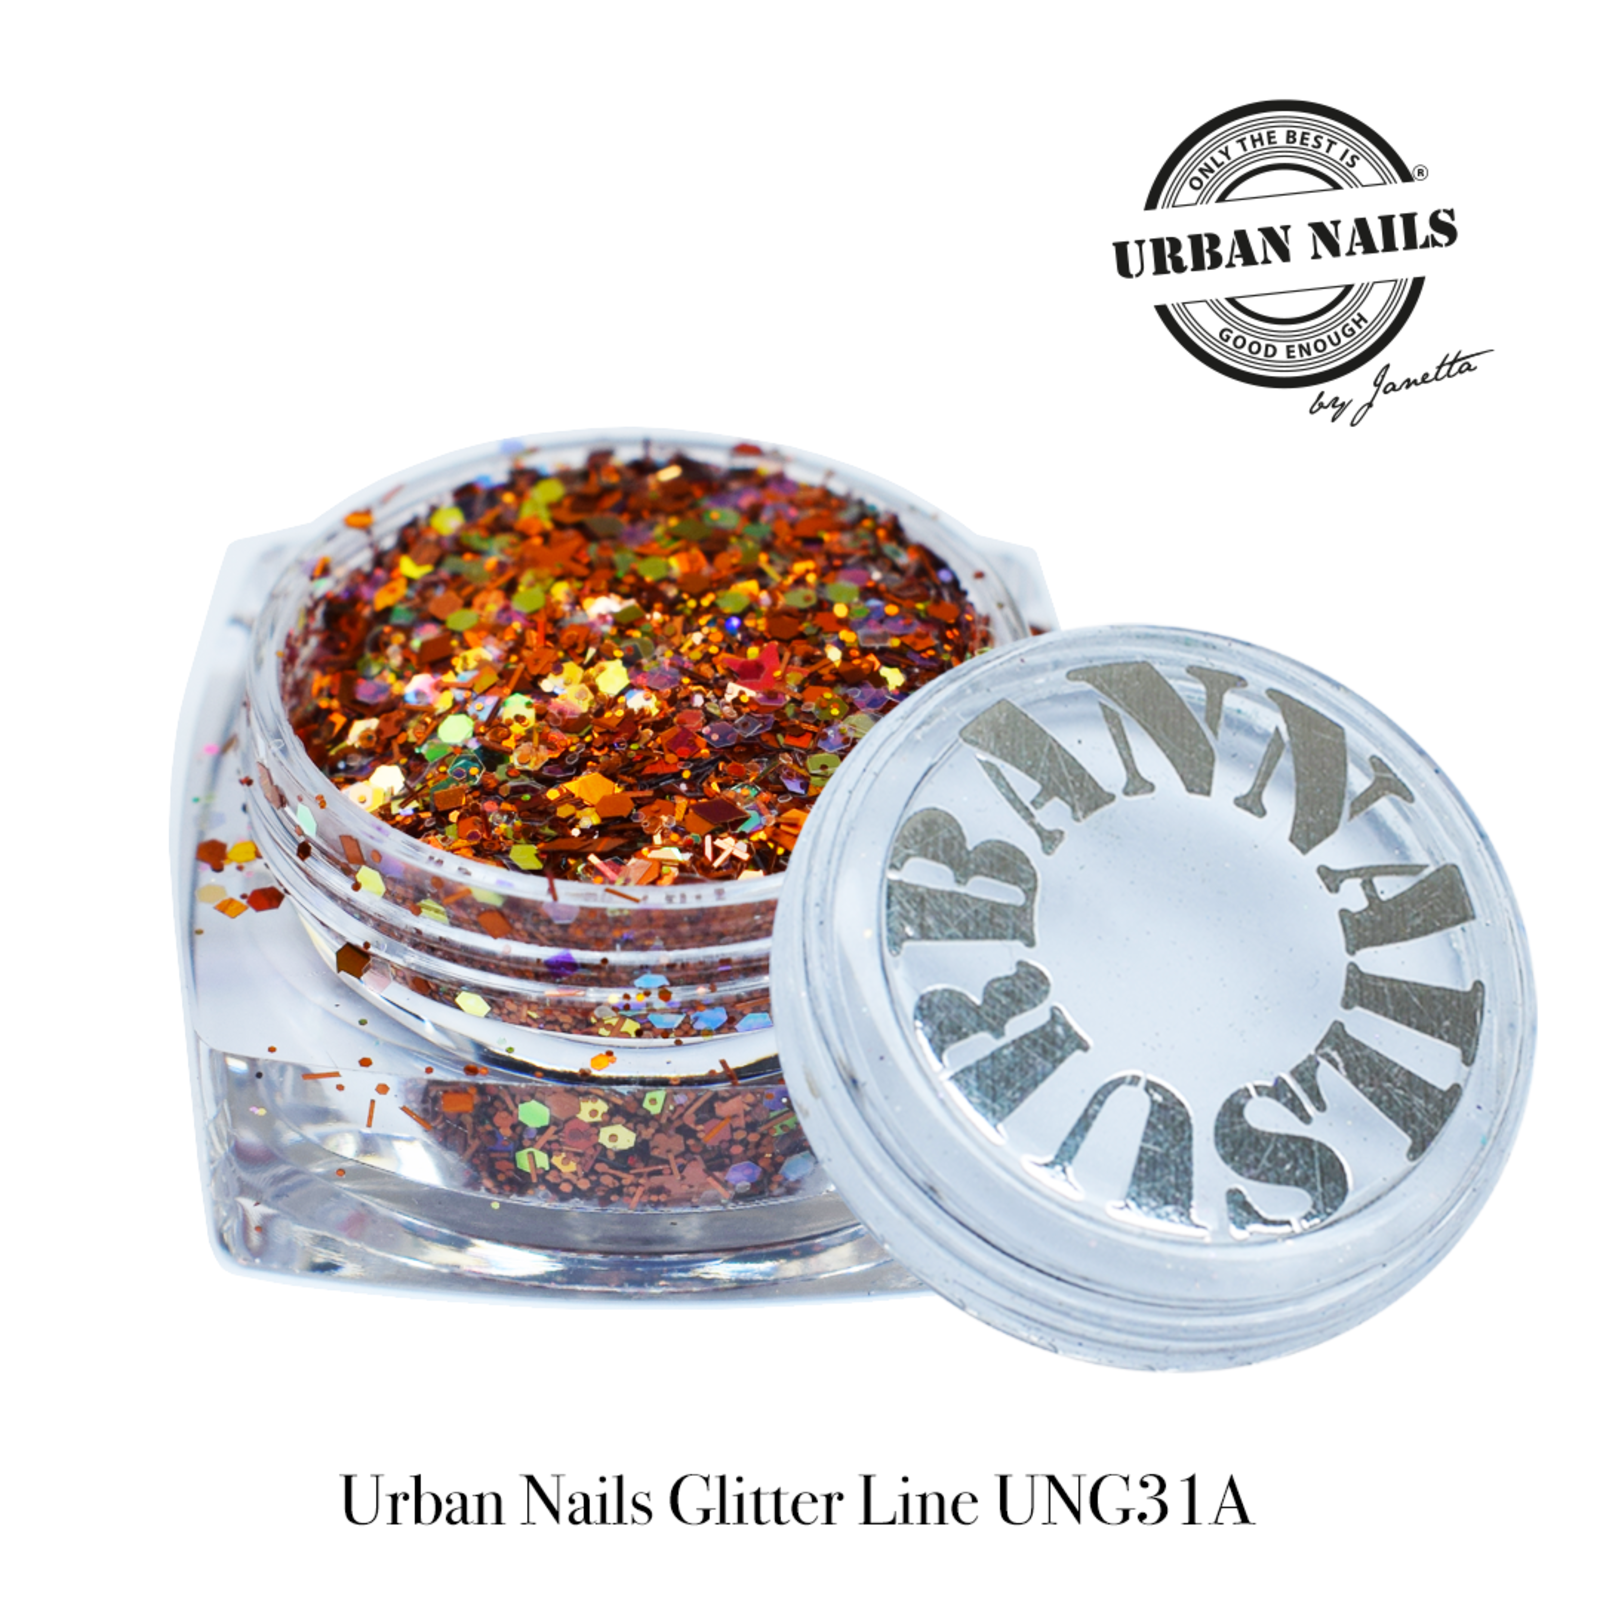 Urban nails Glitter Line UNG31-A